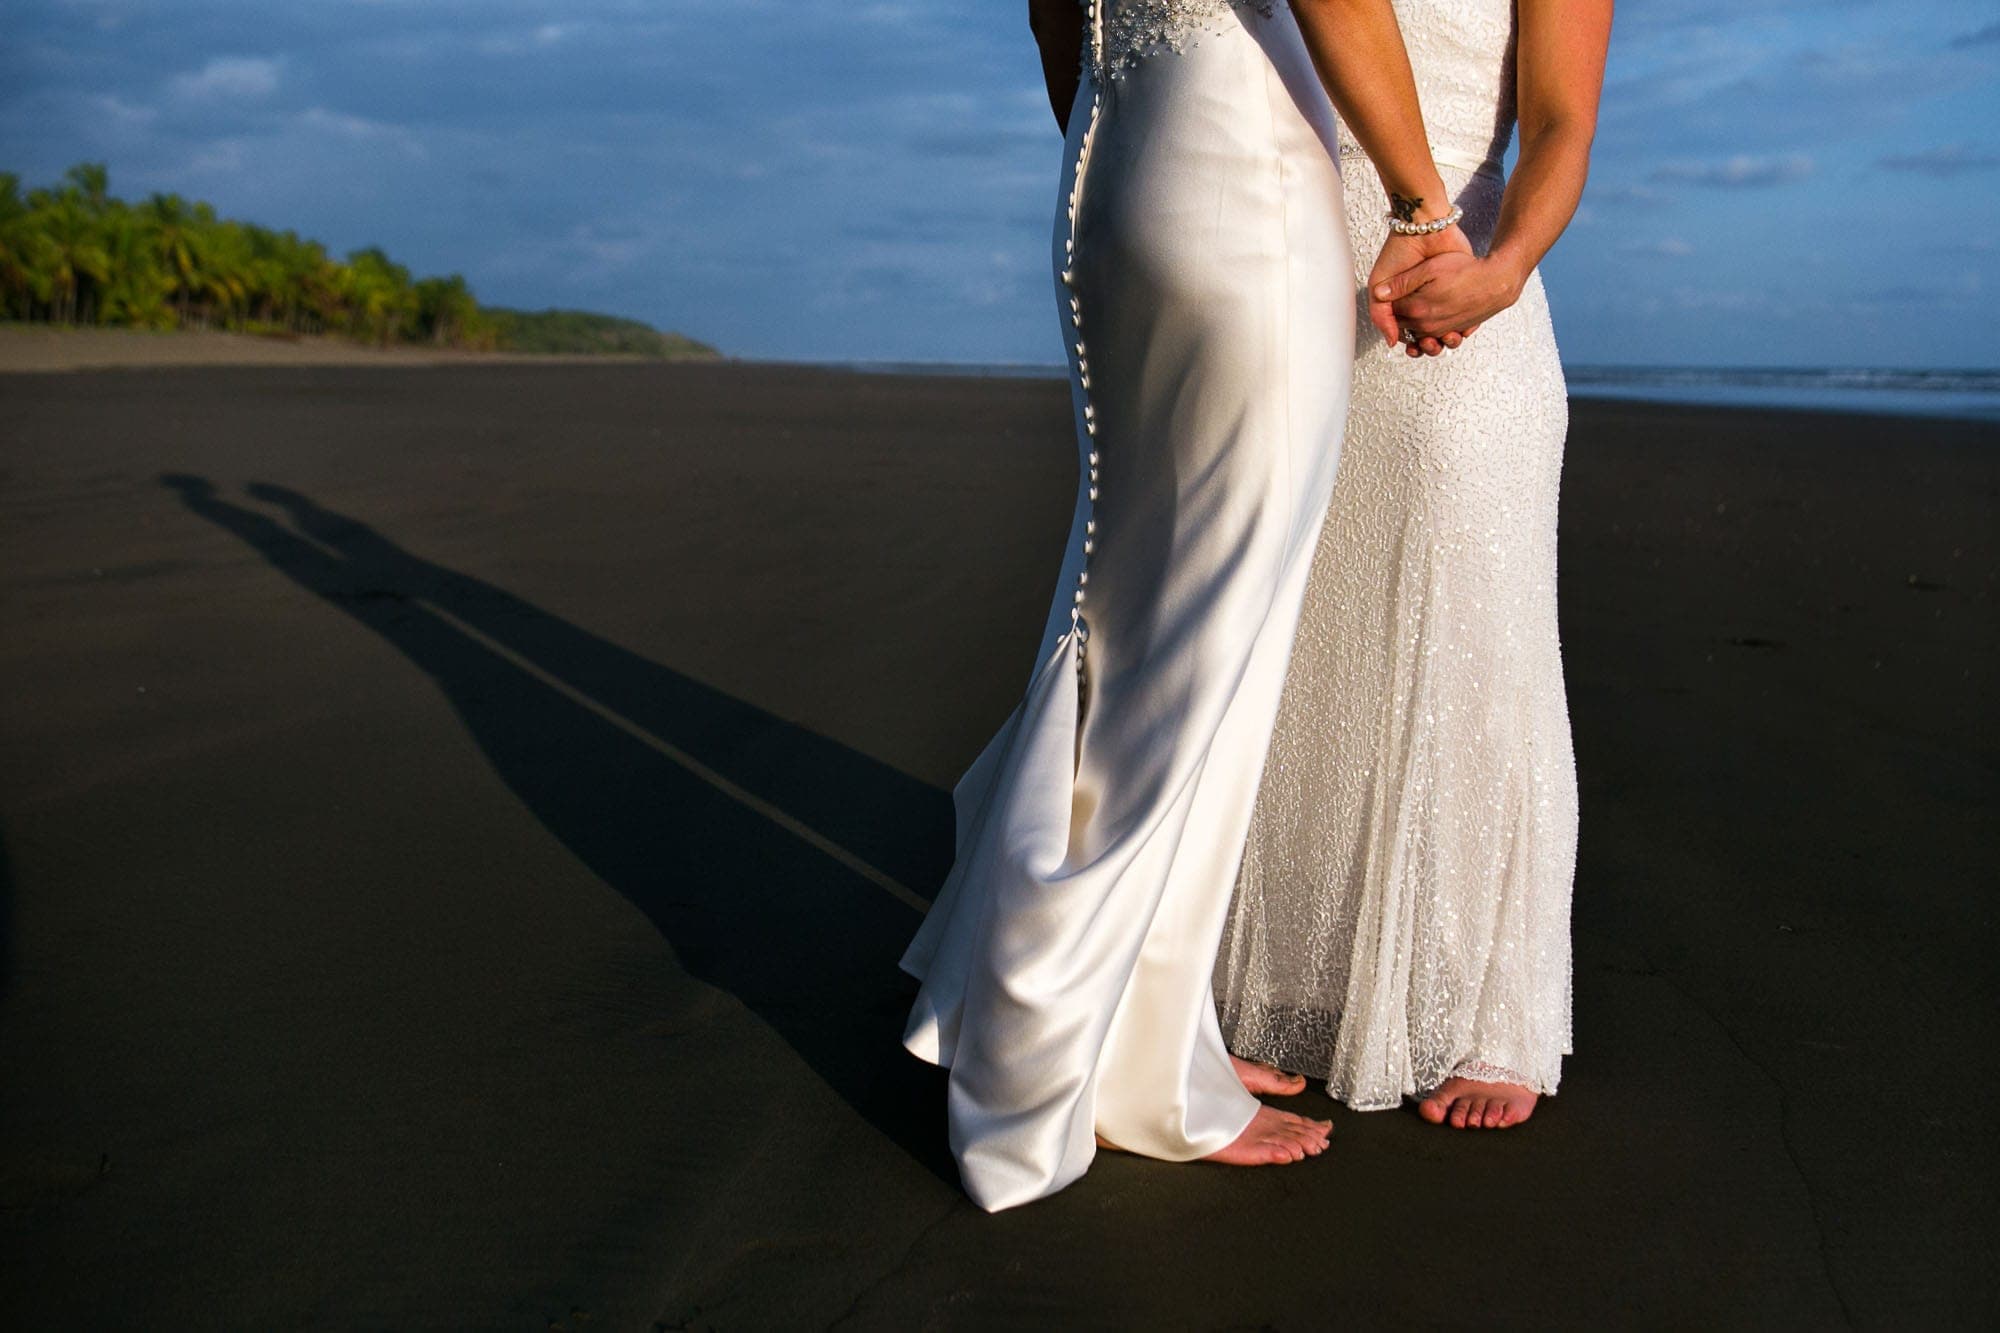 Same sex weddings are legal in Costa Rica!